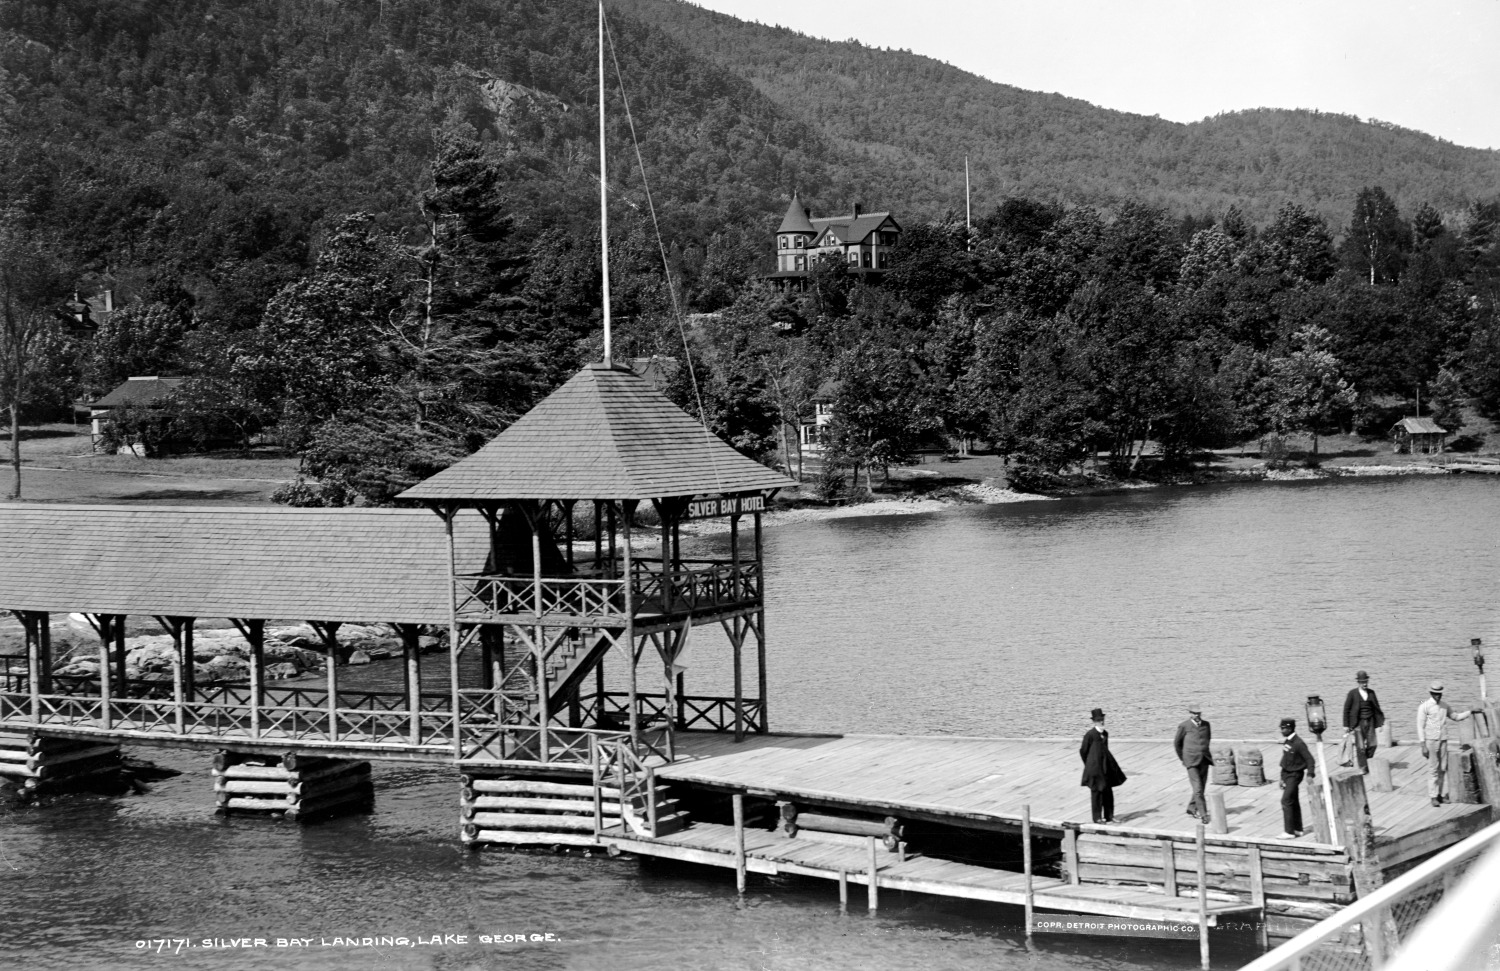 1904 Silver Bay Landing, Lake George, NY Vintage Photograph 11\